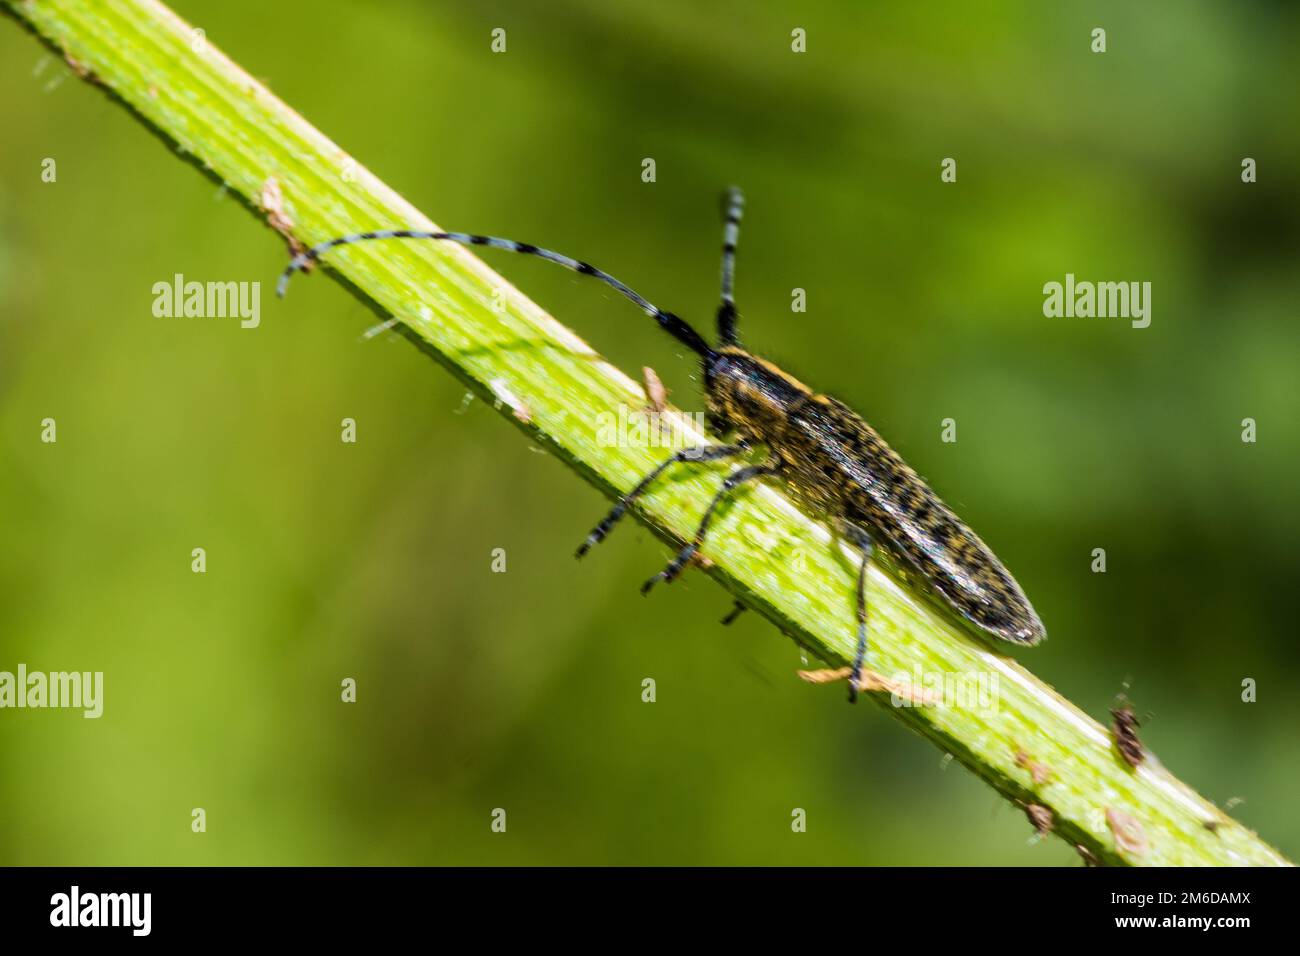 Longhorn beetle with long antennas Stock Photo